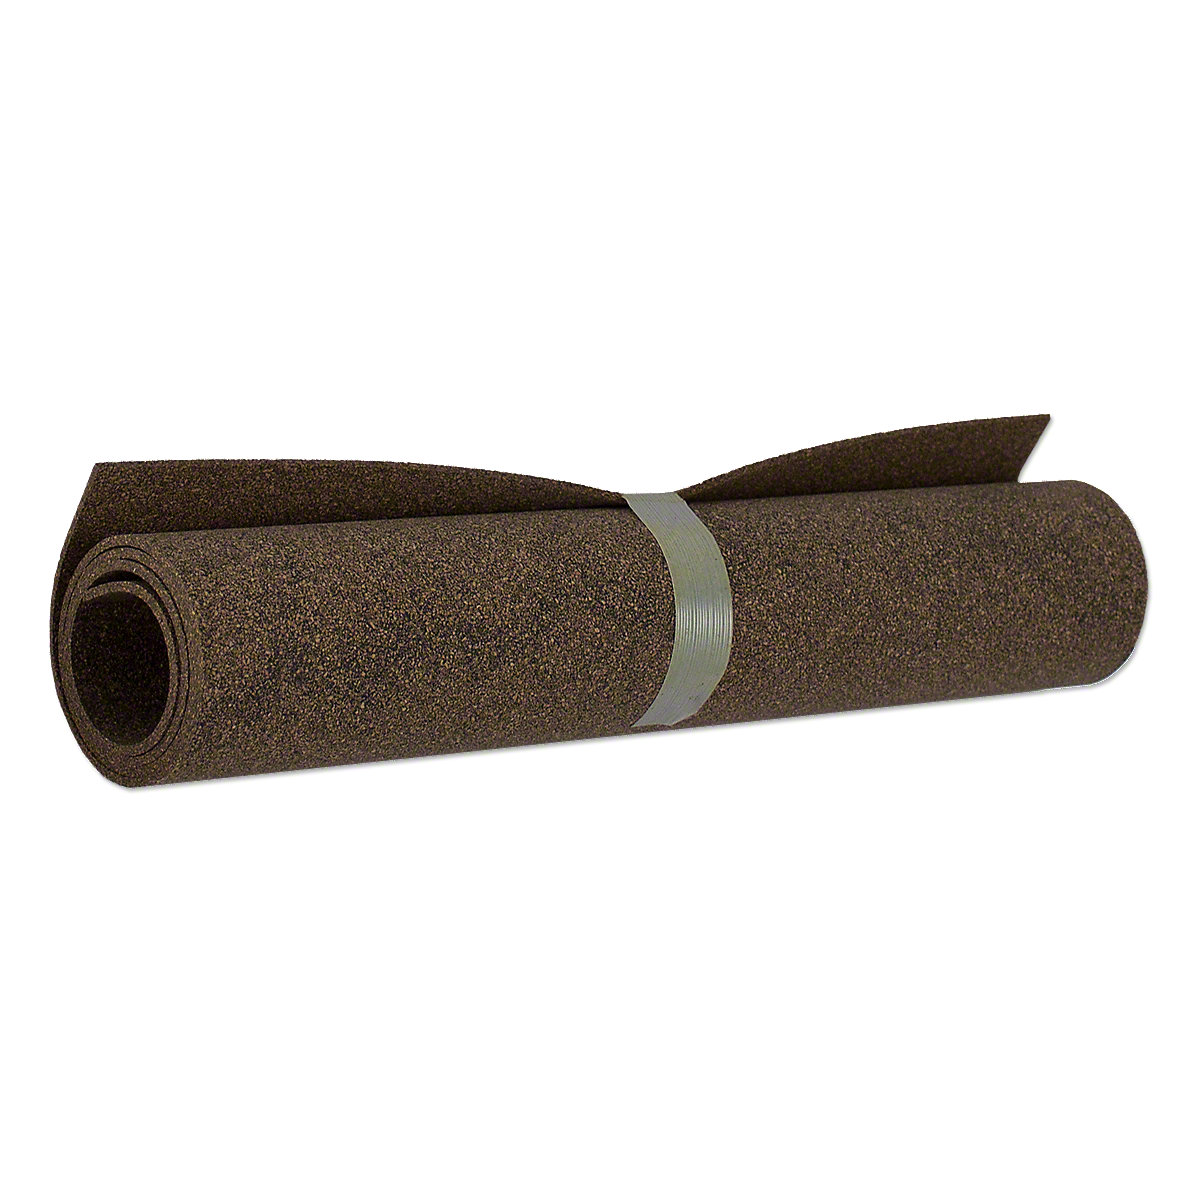 CorkRubber Rollpack Gasket Material for making general purpose gaskets